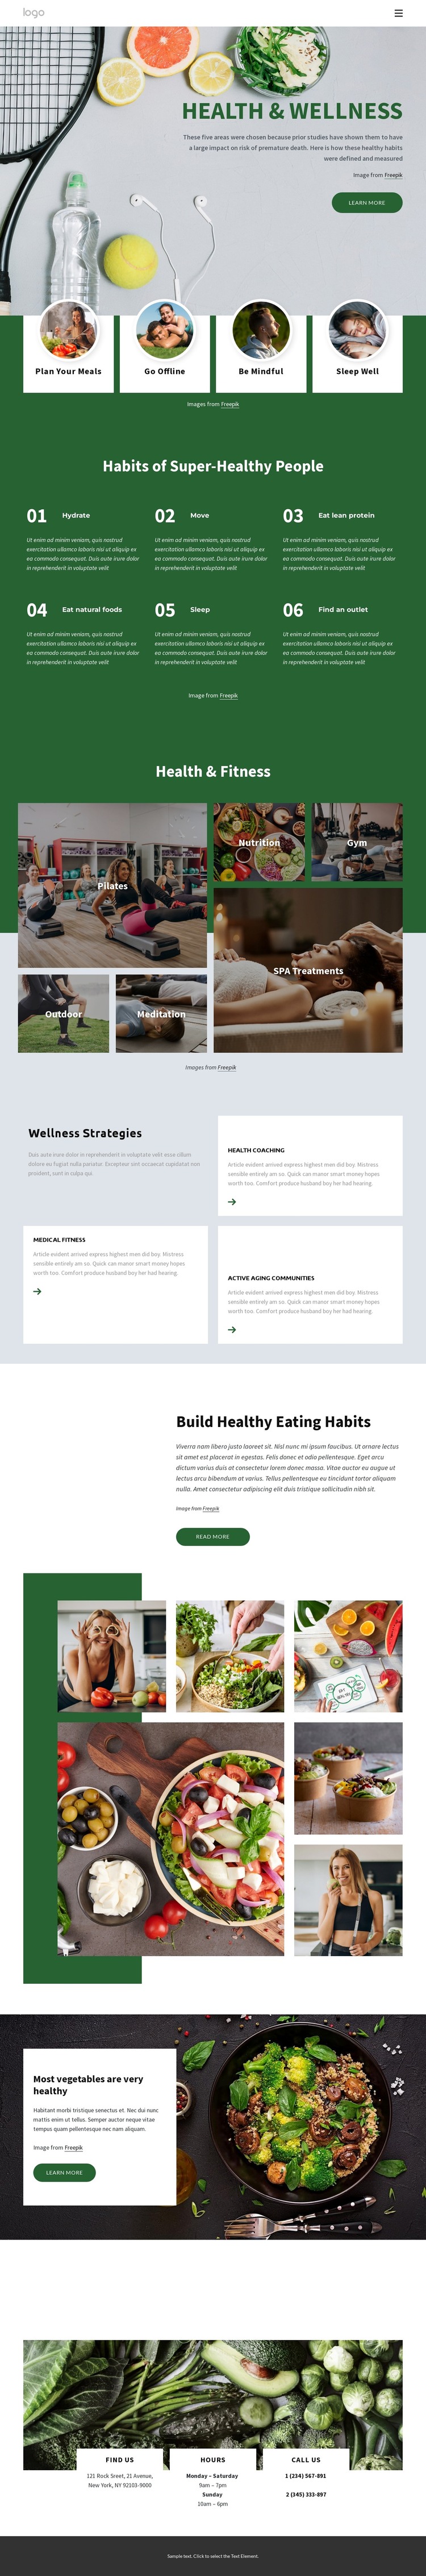 Health and wellness center WordPress Theme